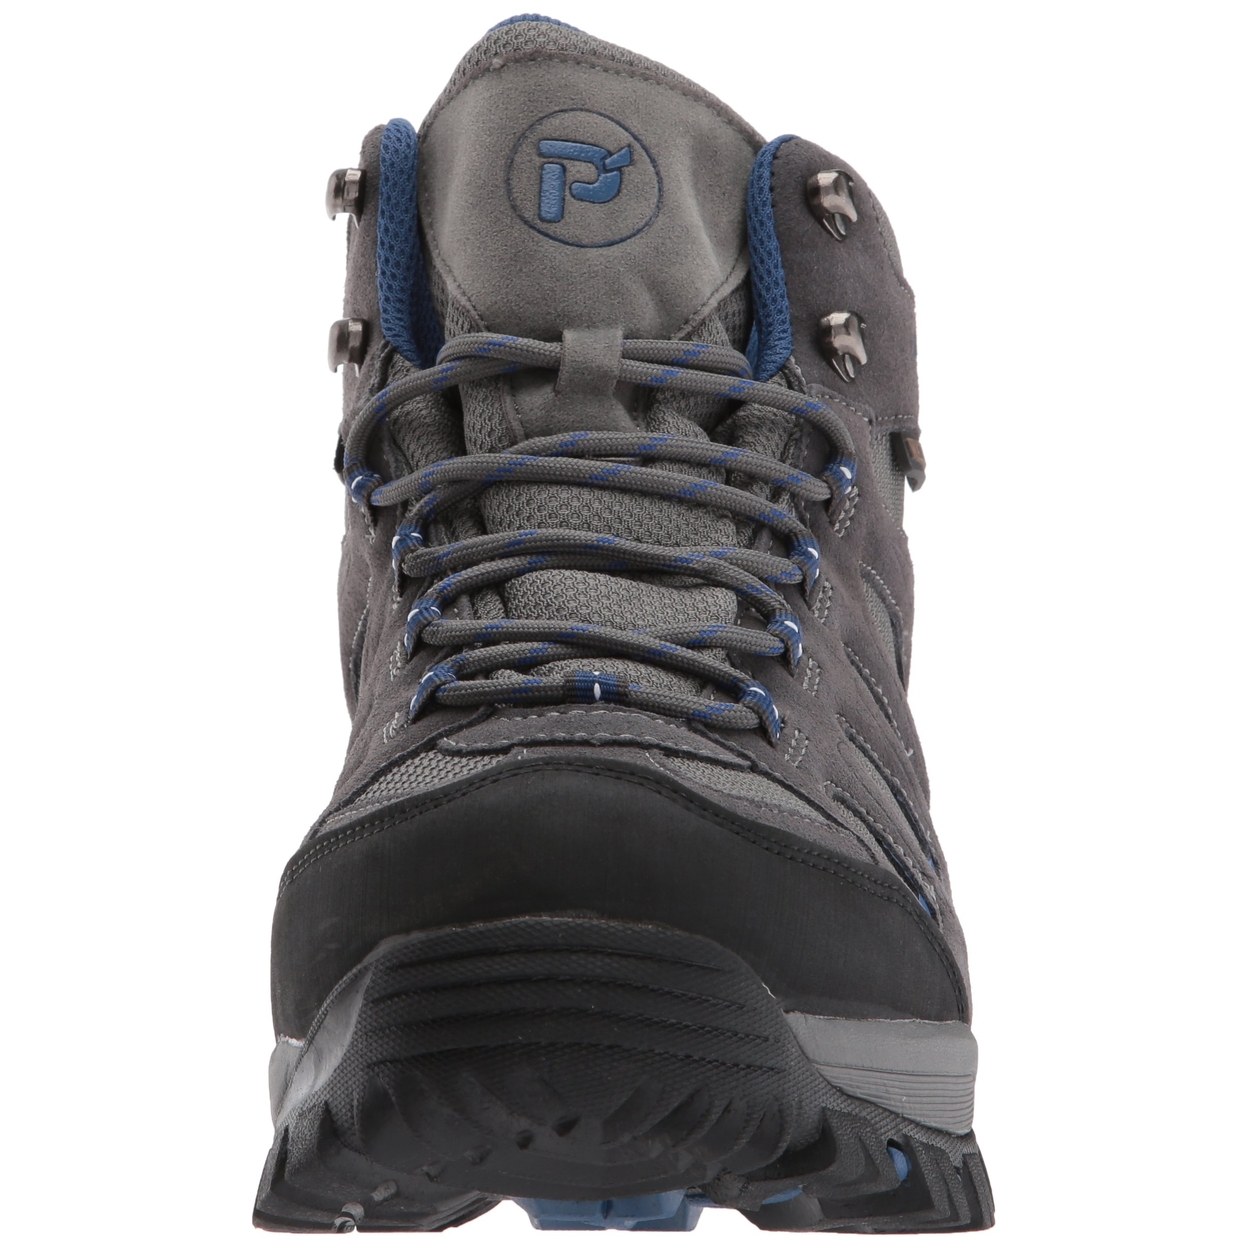 Propet Men's Ridge Walker Hiking Boot Grey/Blue - M3599GRB GREY/BLUE - GREY/BLUE, 8-D